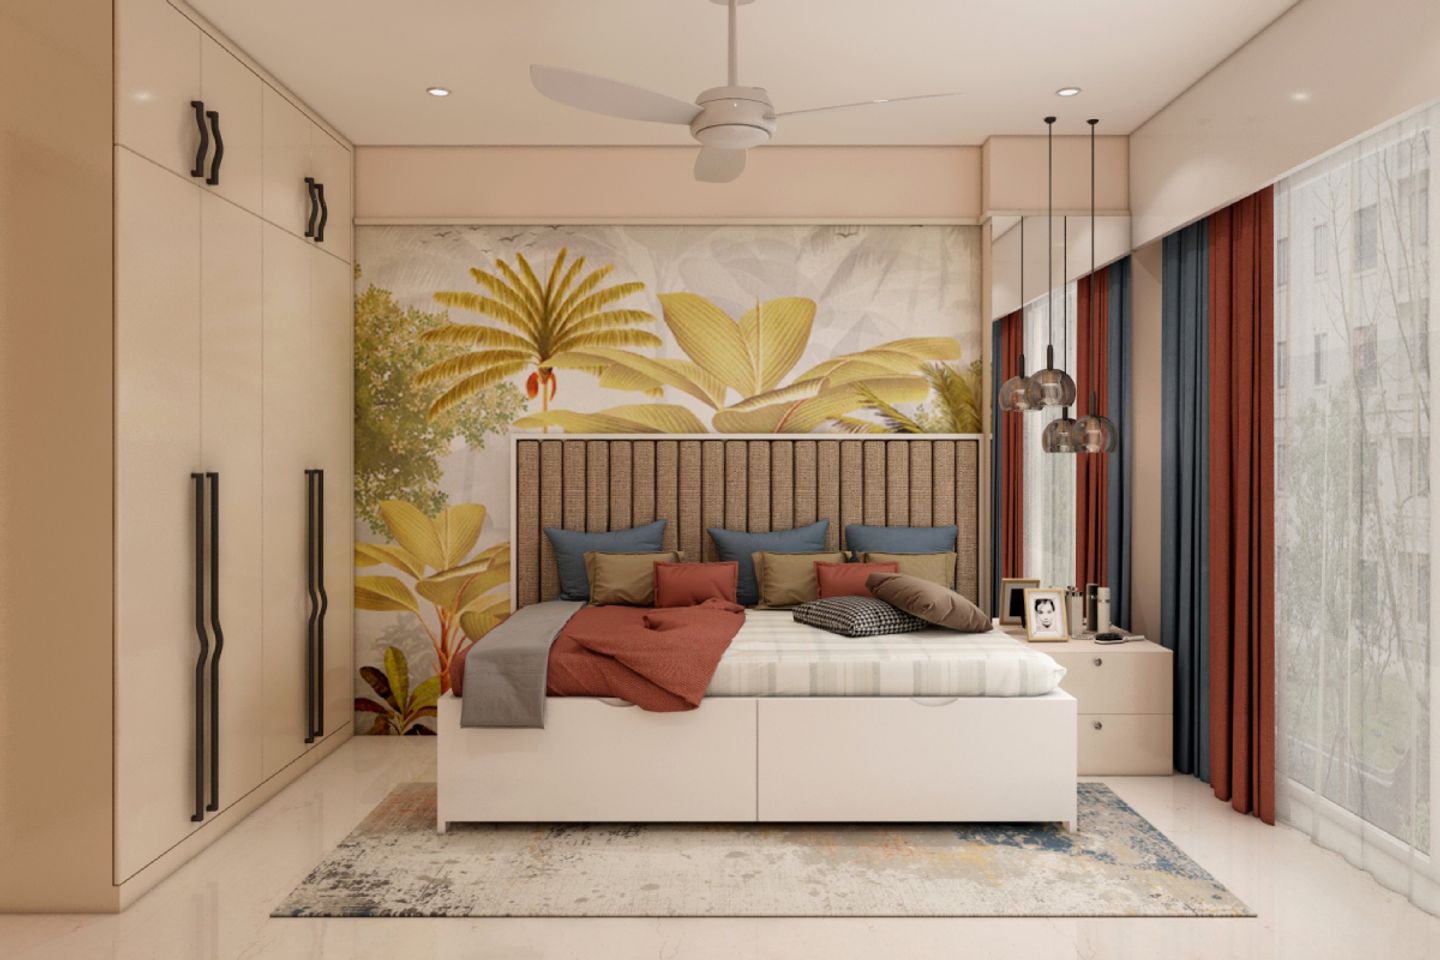 Master Bedroom Design With Tropical Wallpaper - Livspace